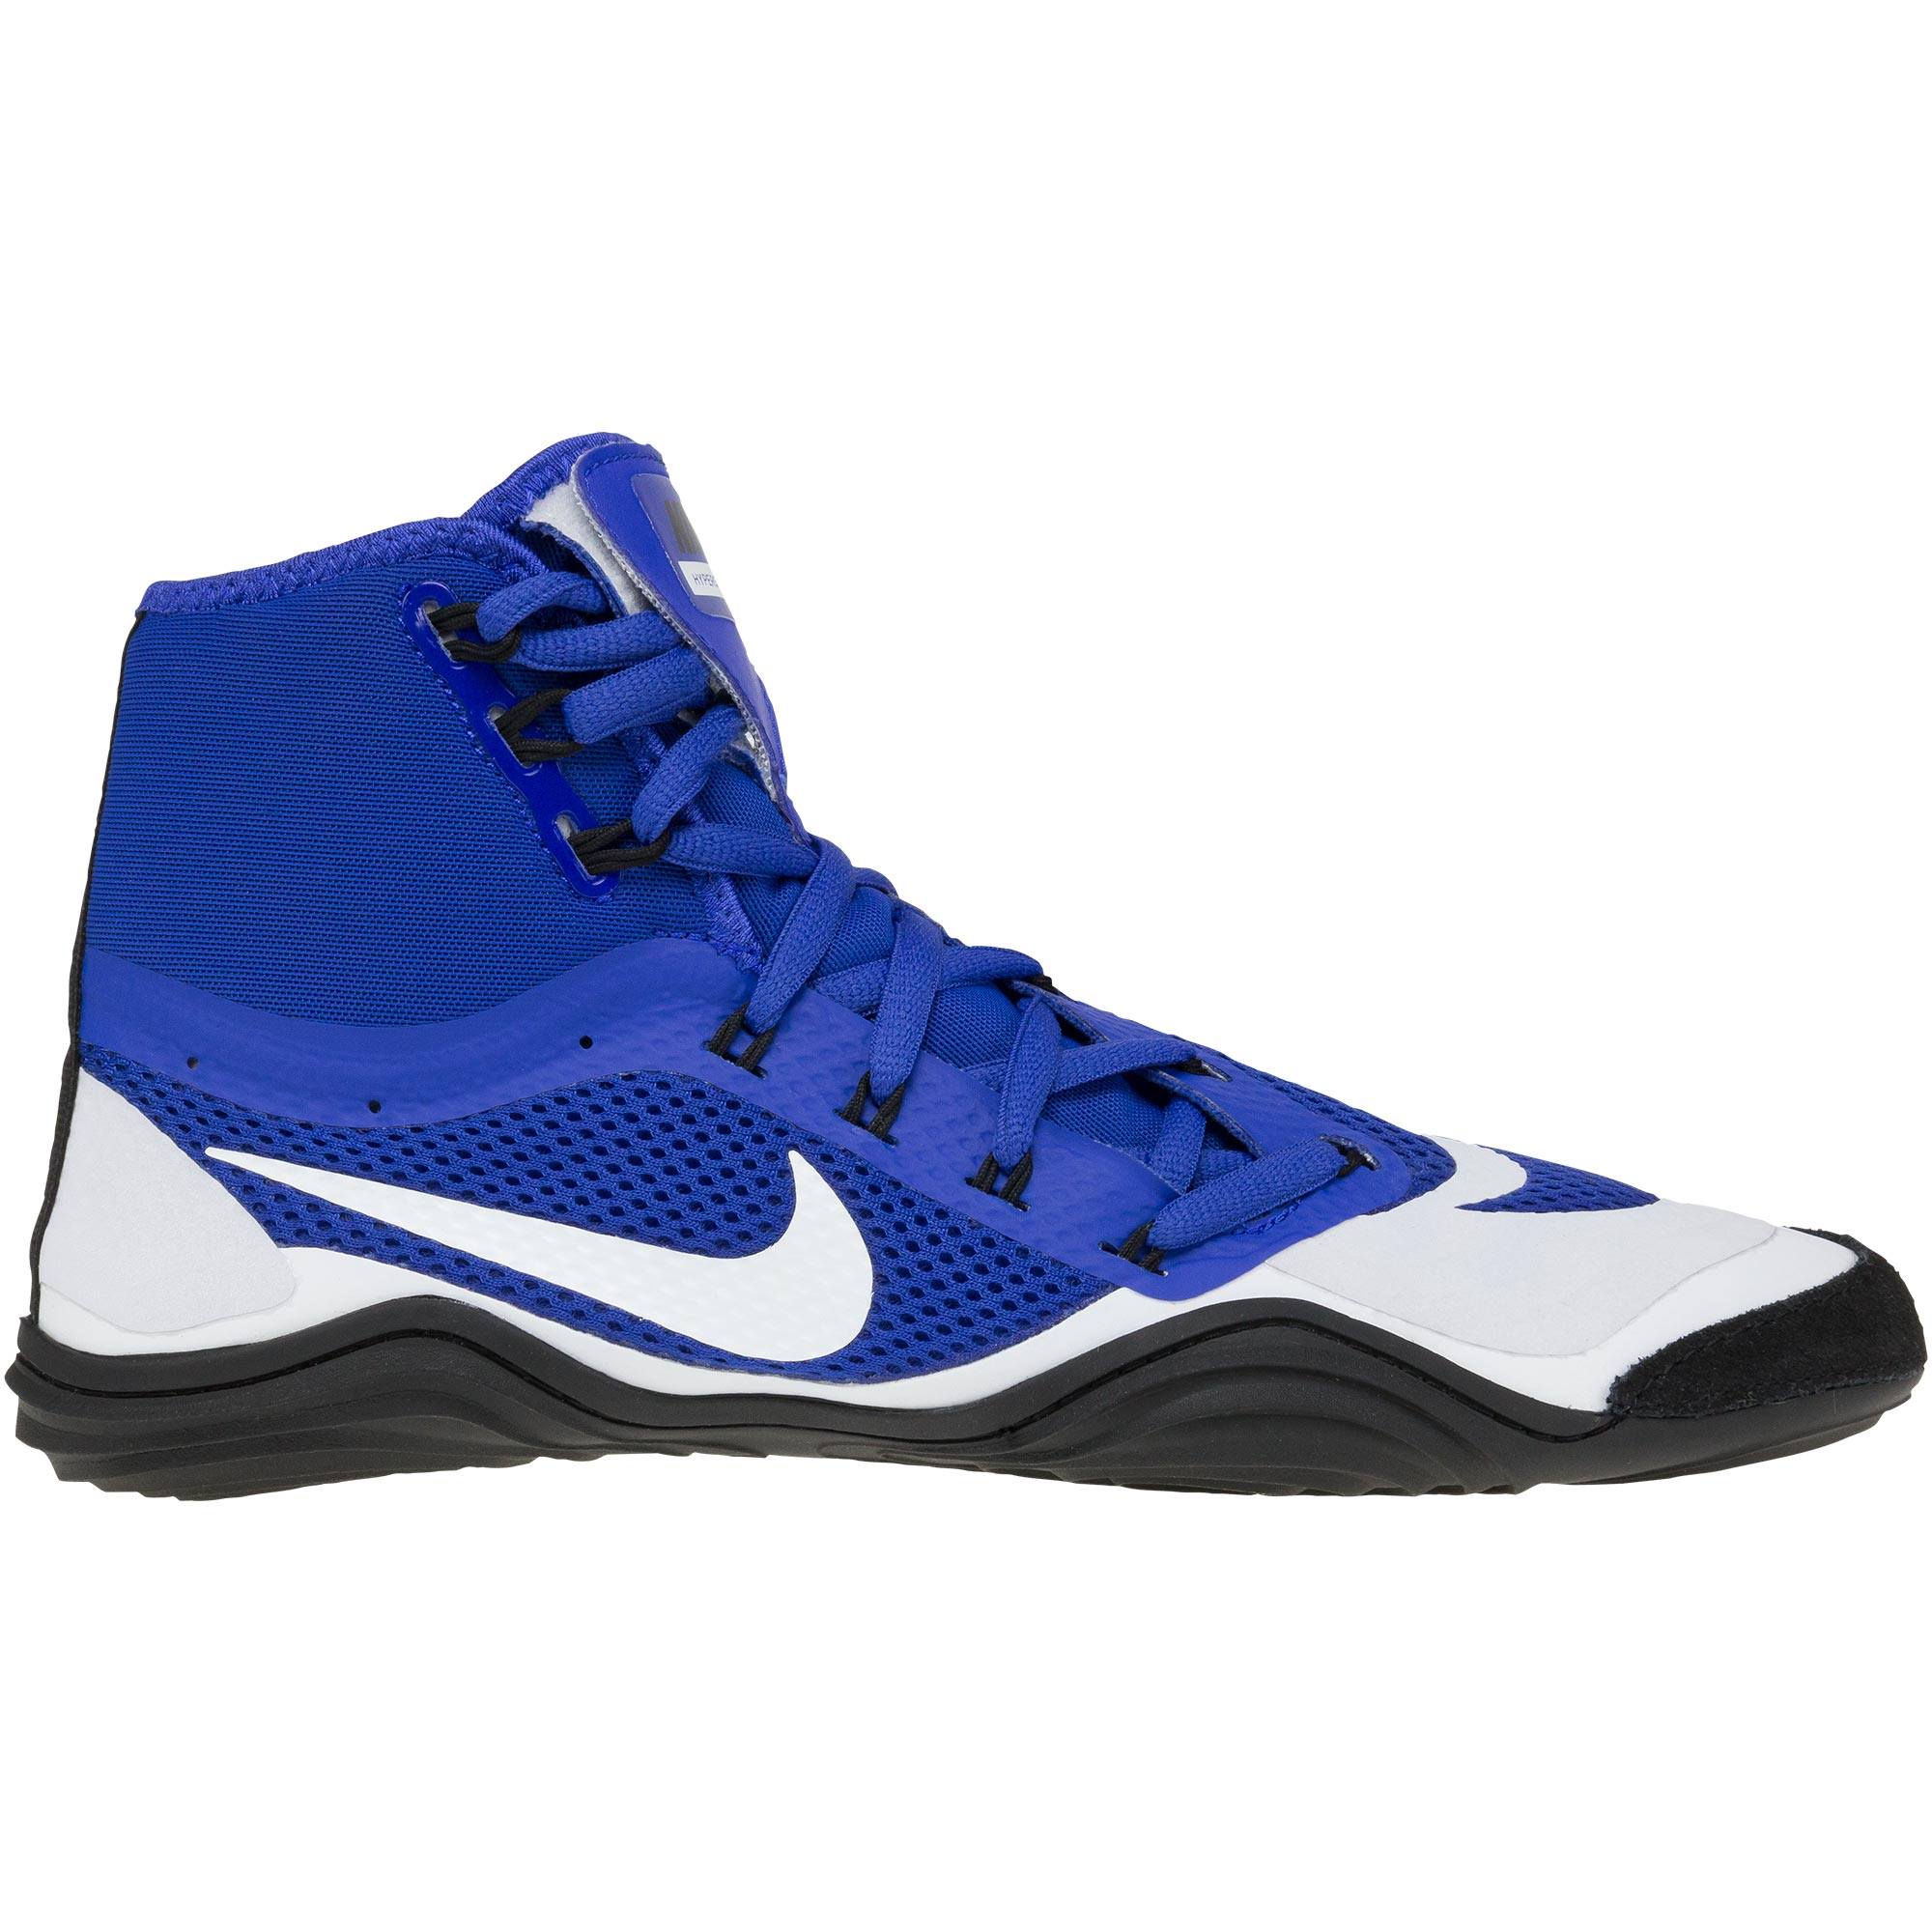 Blue and Black Nike Logo - Nike Hypersweep Shoes | WrestlingMart | Free Shipping